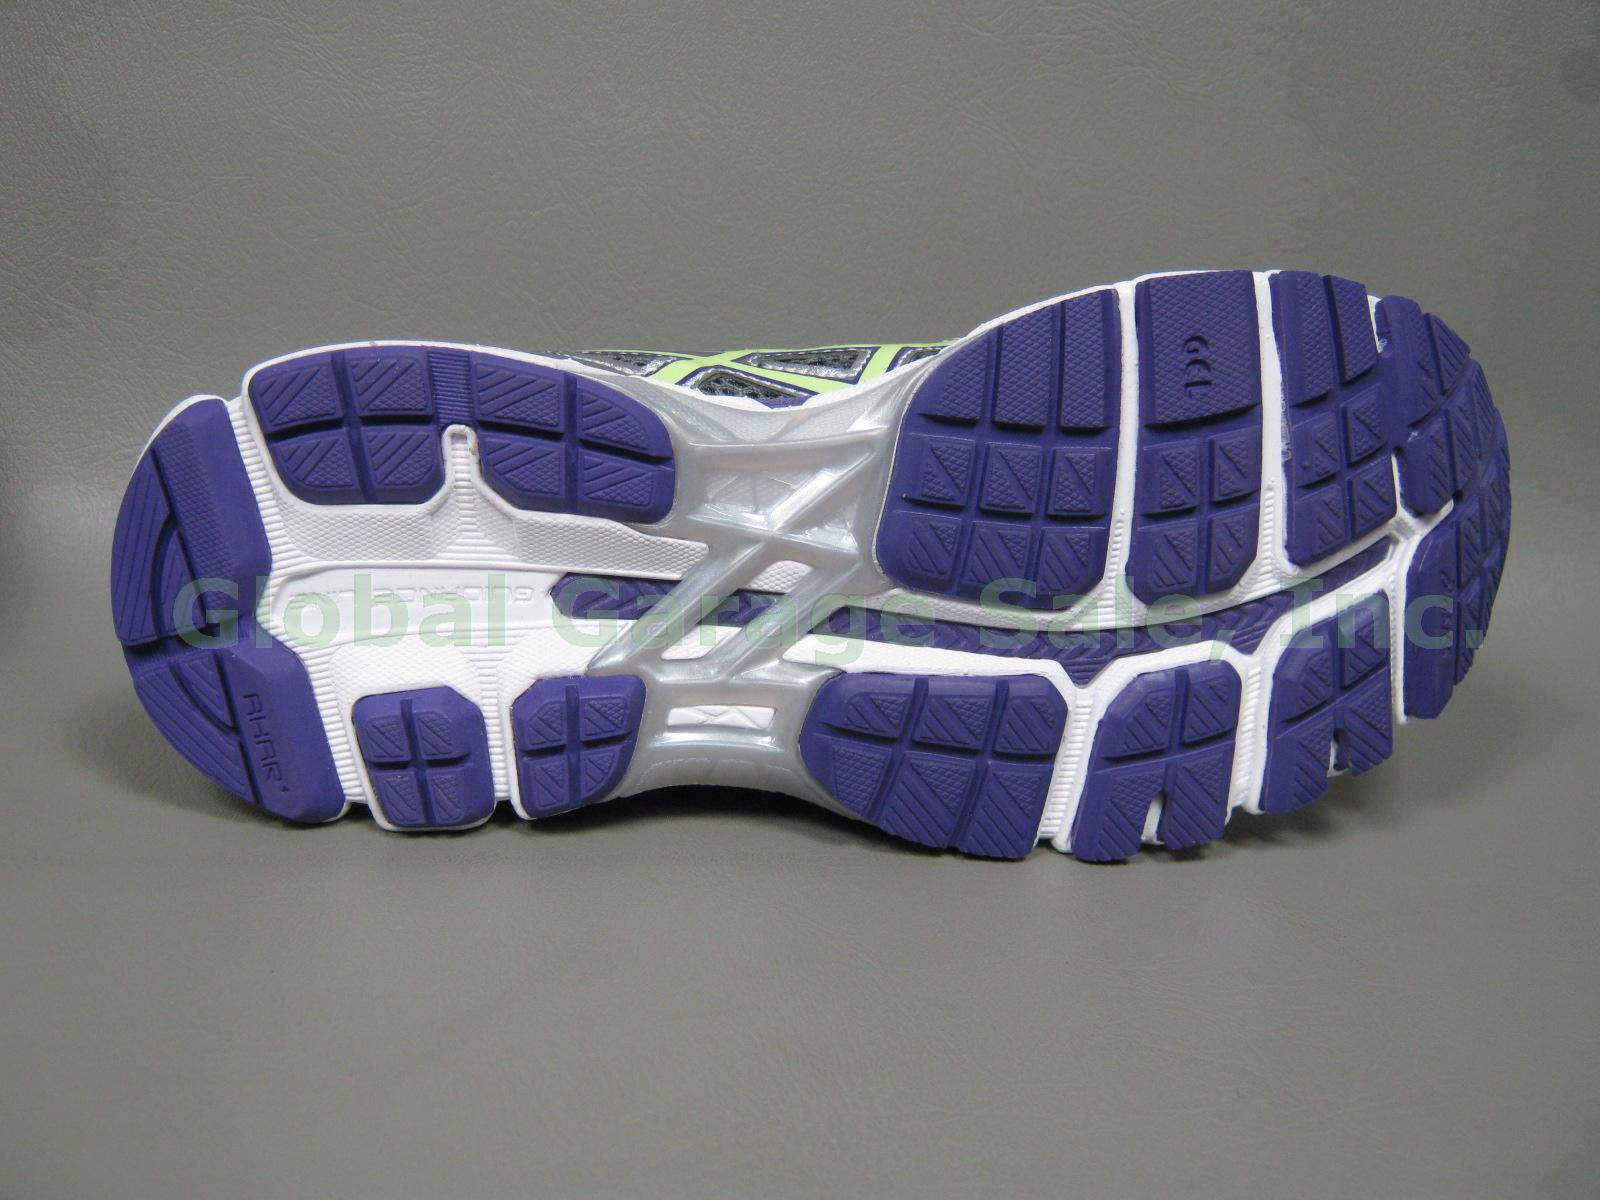 NEW Asics Womens Gel Kayano 21 Running Shoes US 6 EUR 37 Charcoal Green Purple 5